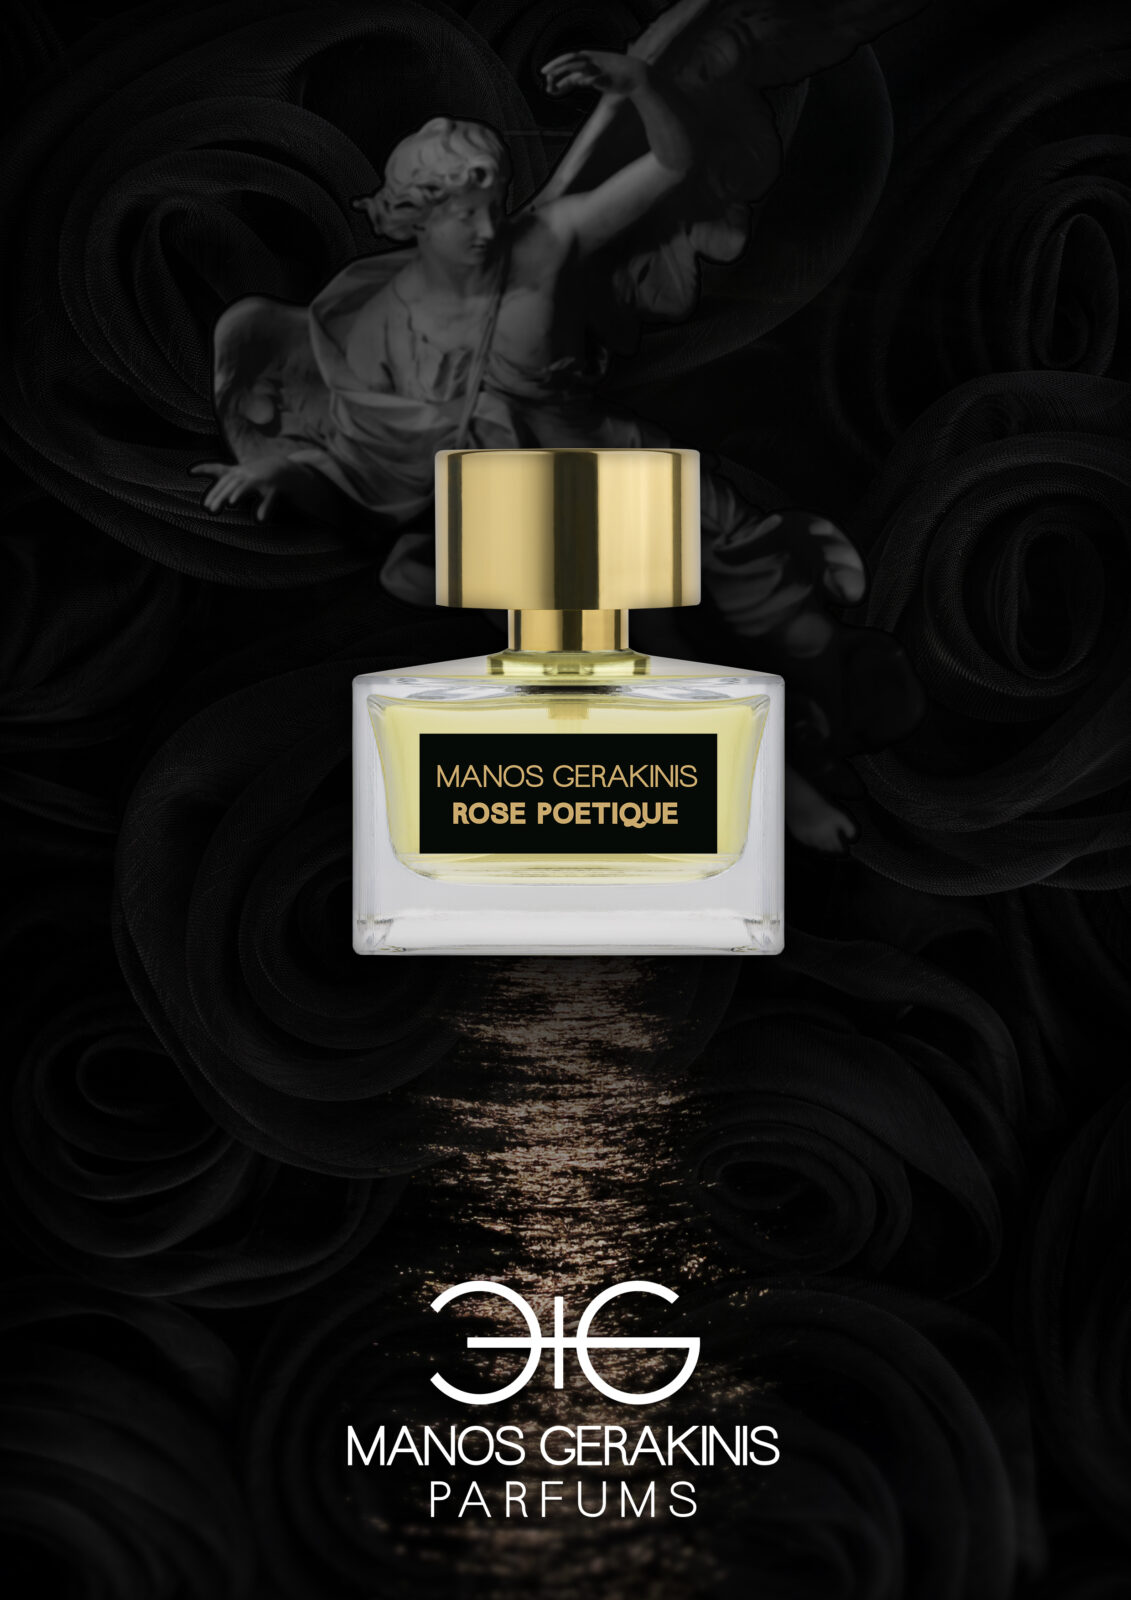 Rose Poetique campaign by Manos Gerakinis Parfums